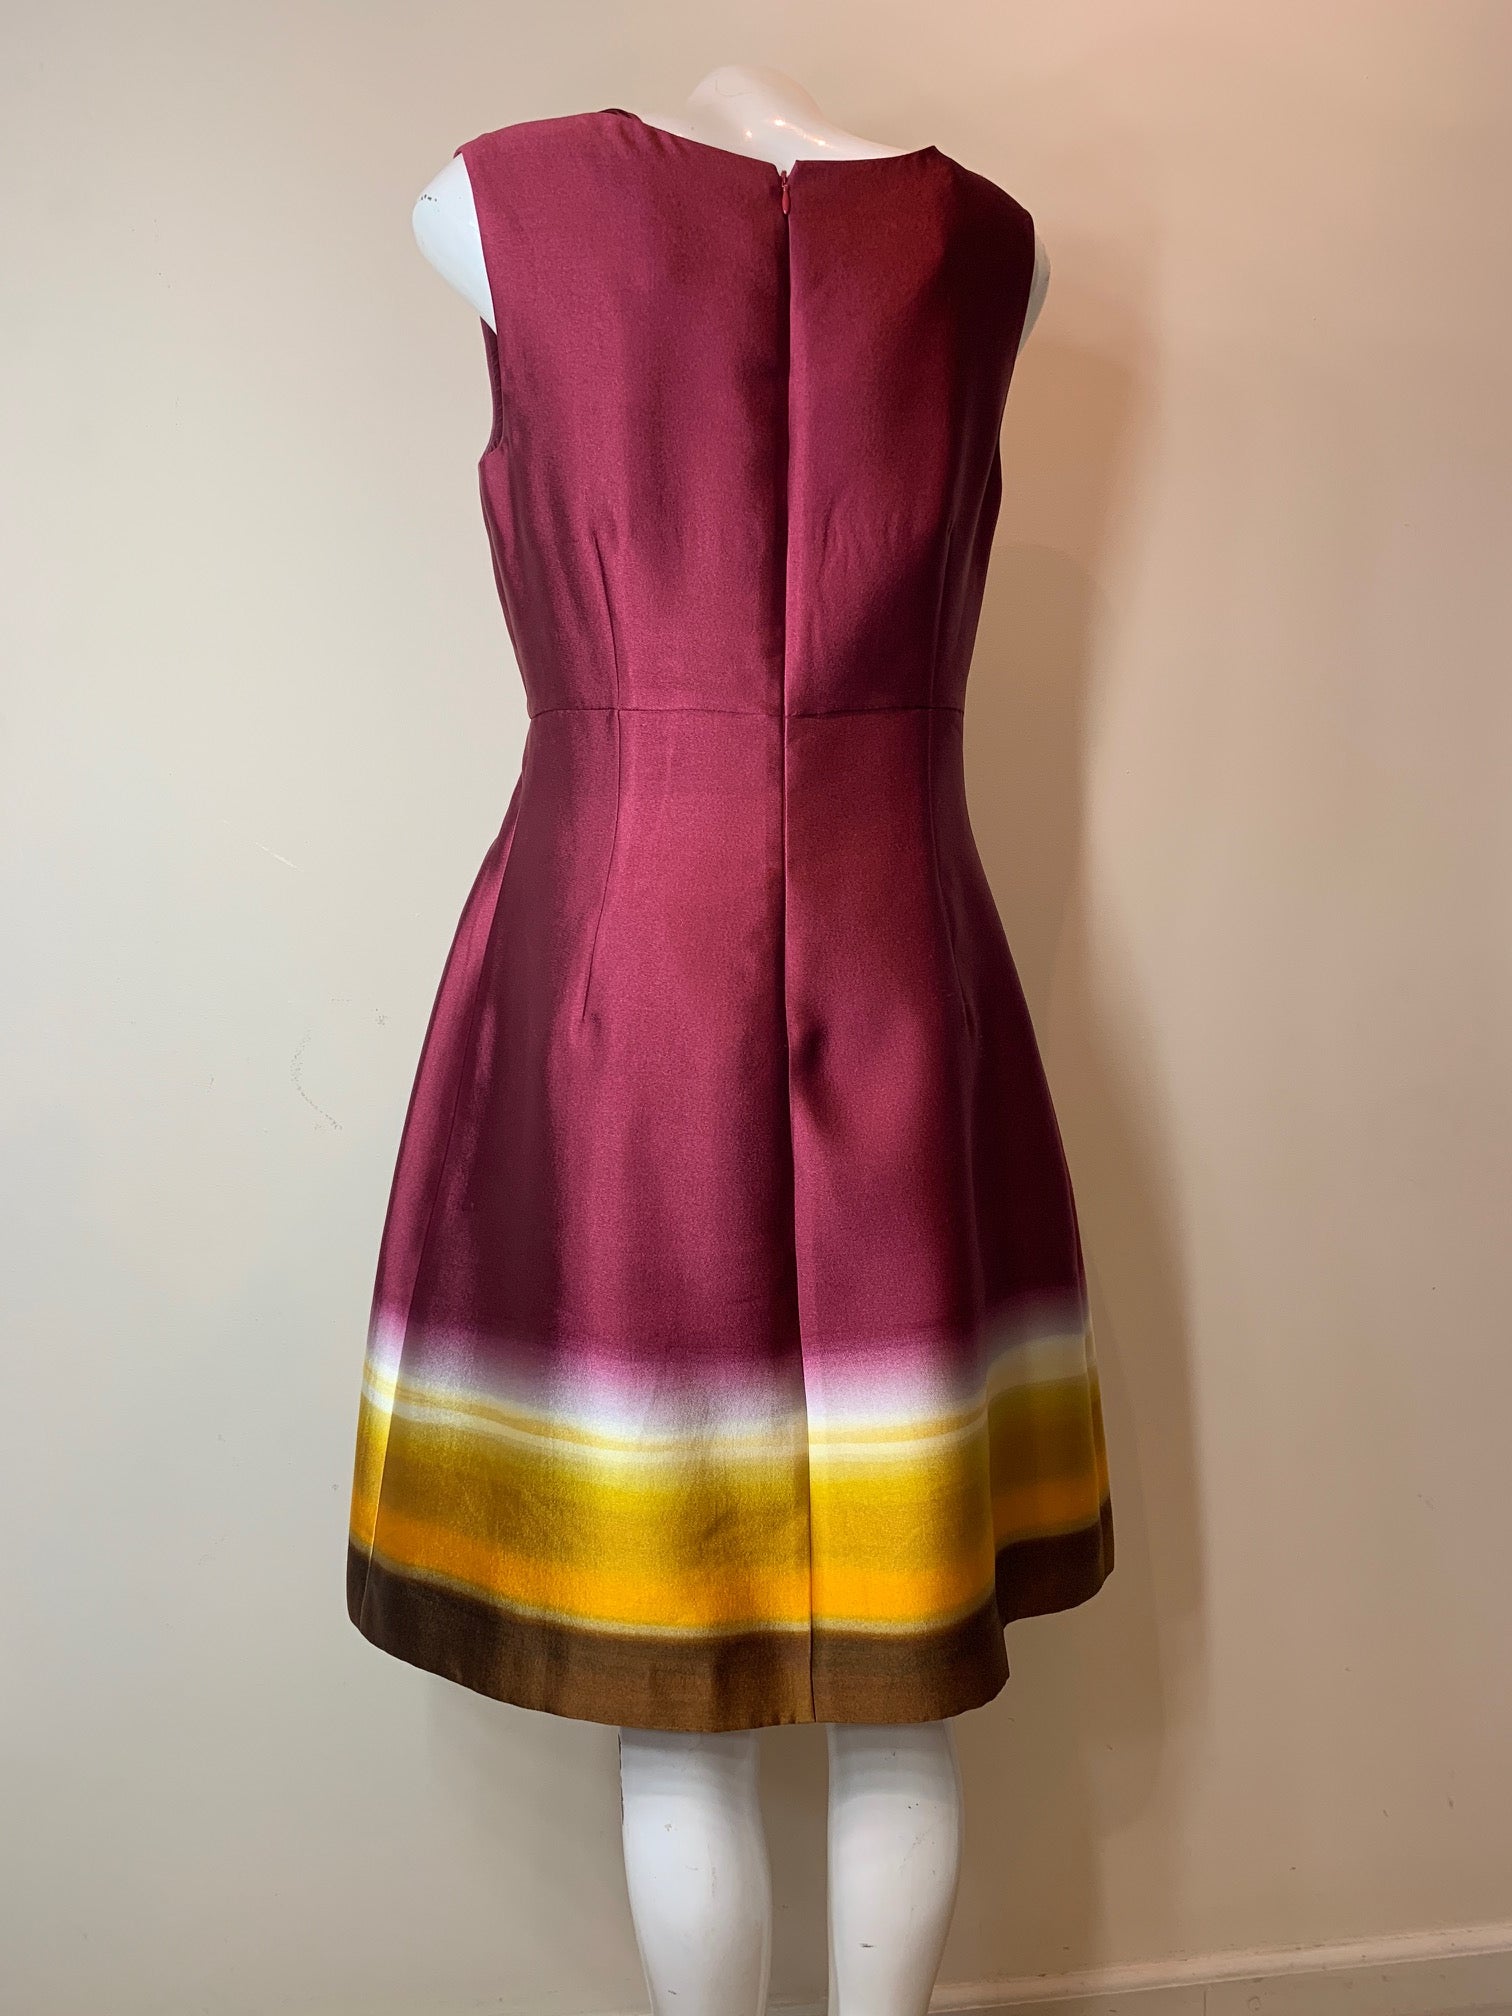 Prada Ombre Print Sleeveless Cocktail Dress